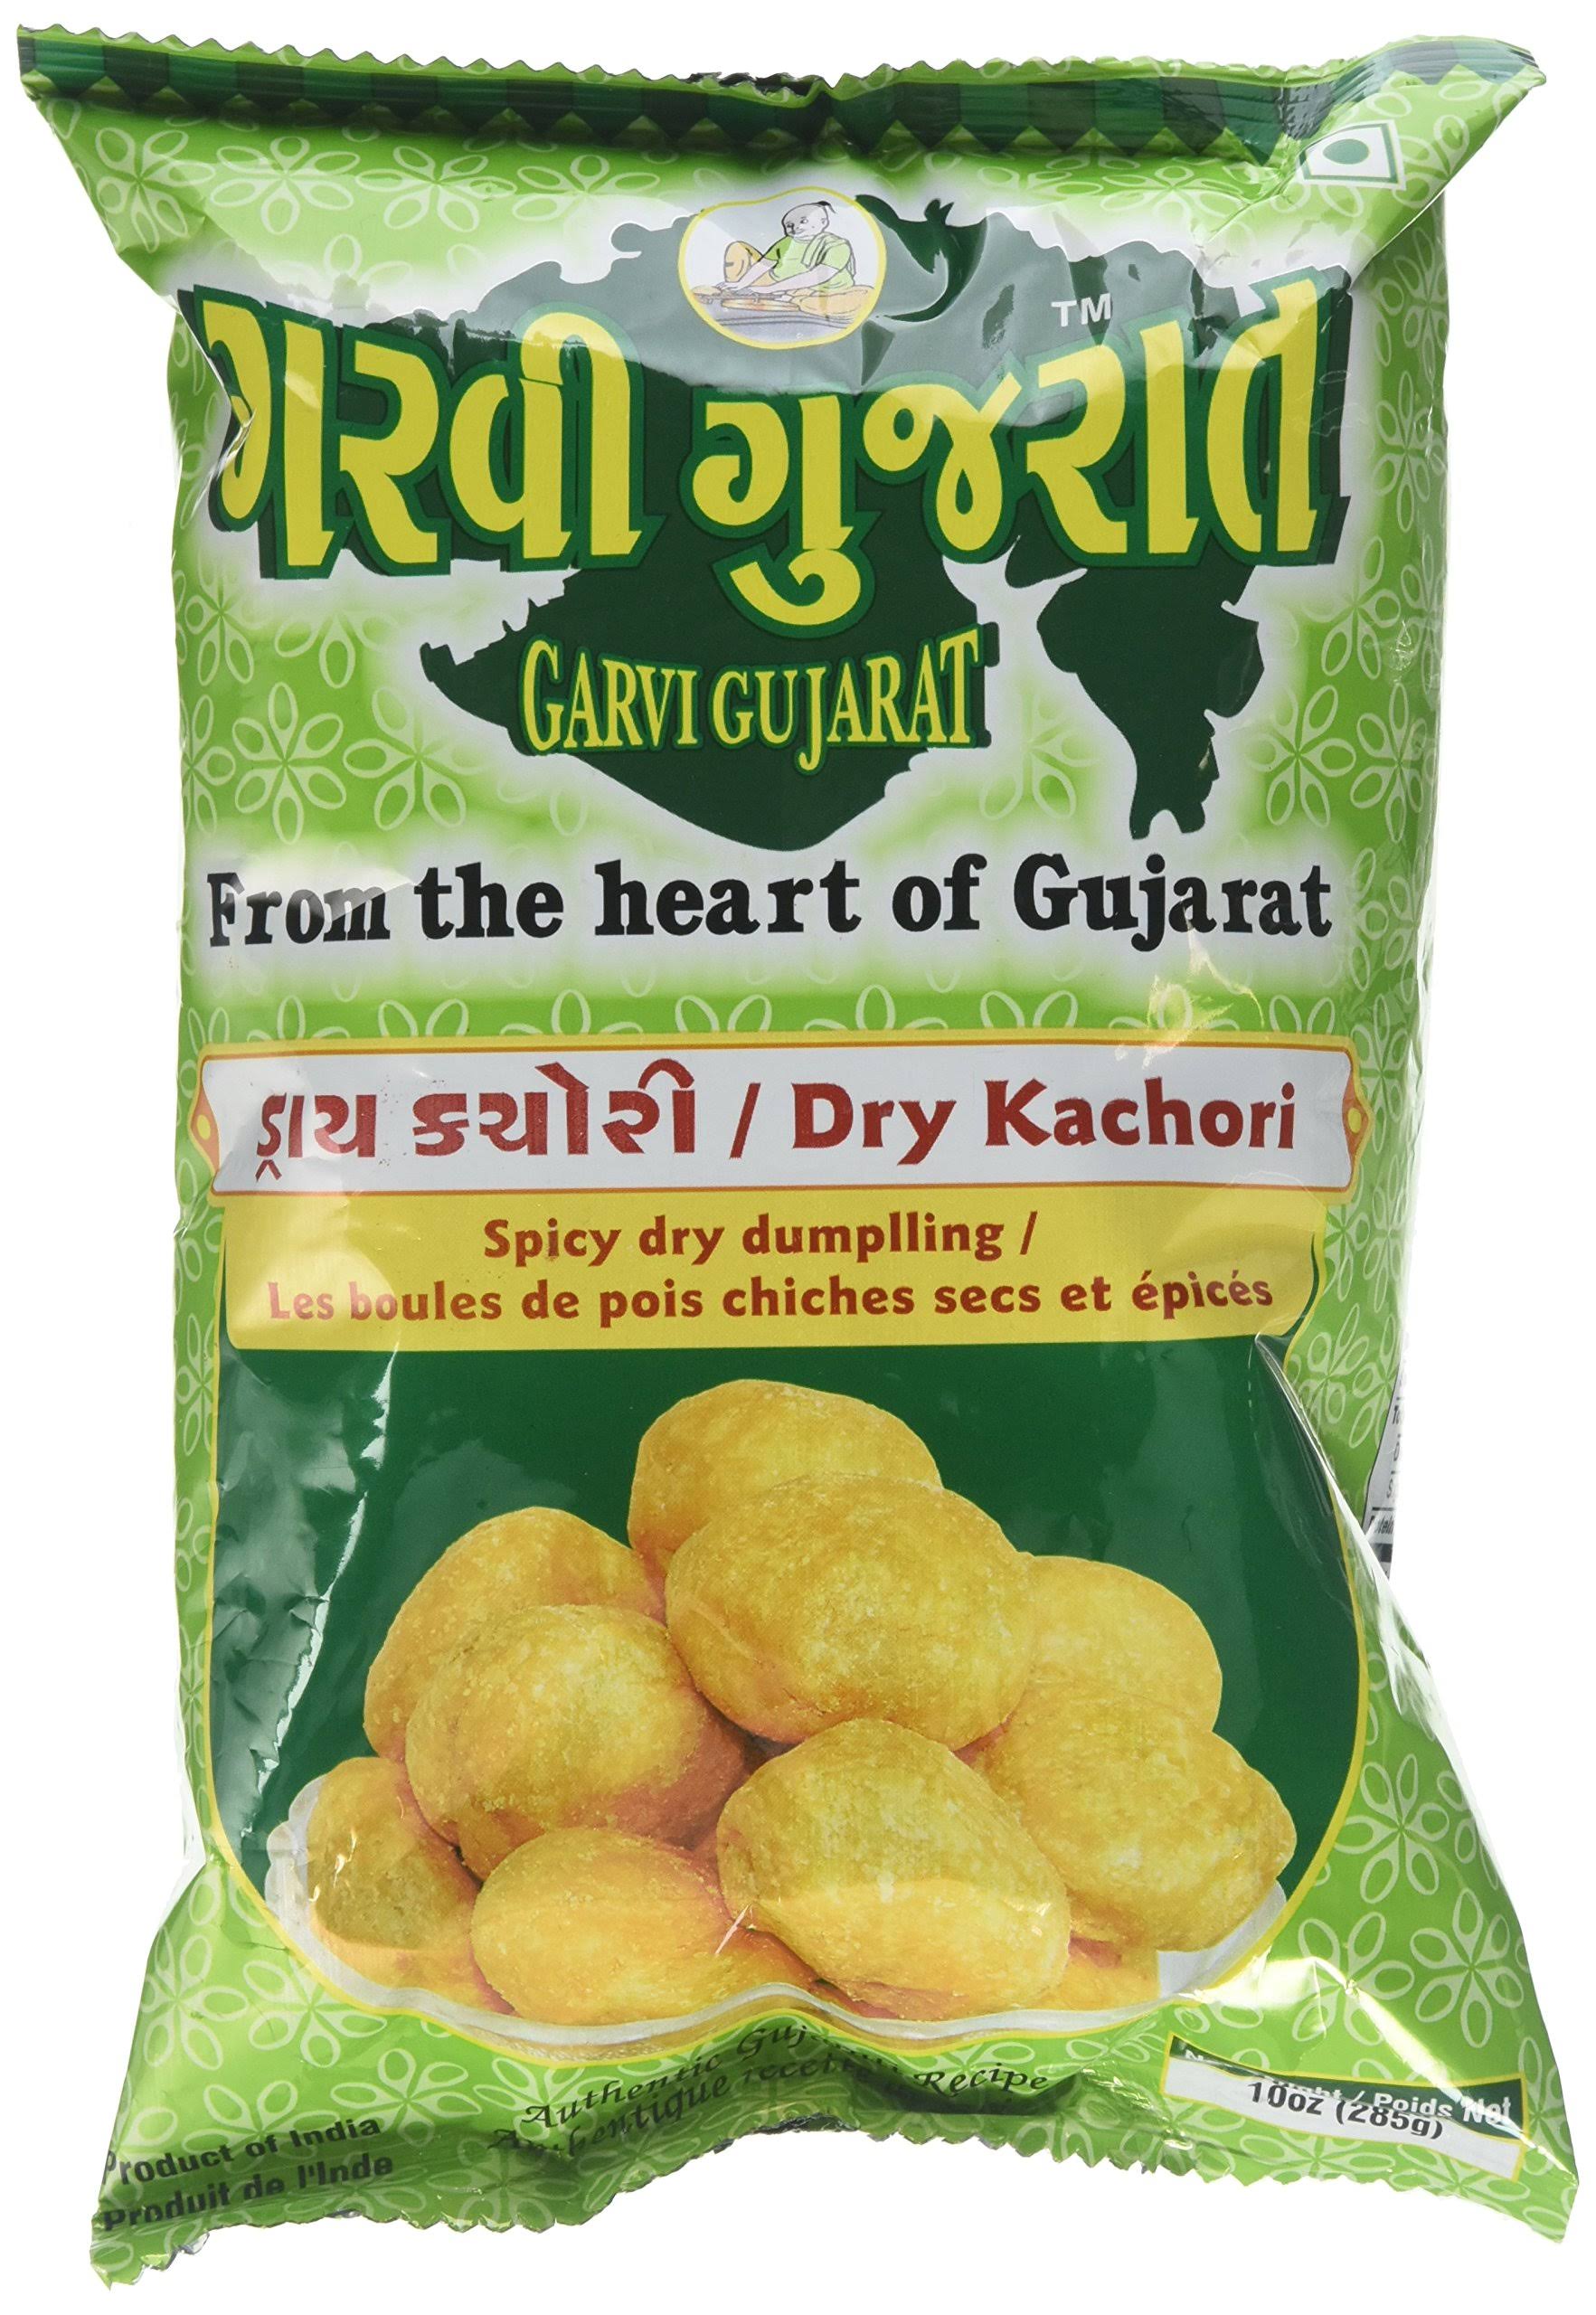 Garvi Gujarat Dry Kachori - 10 oz